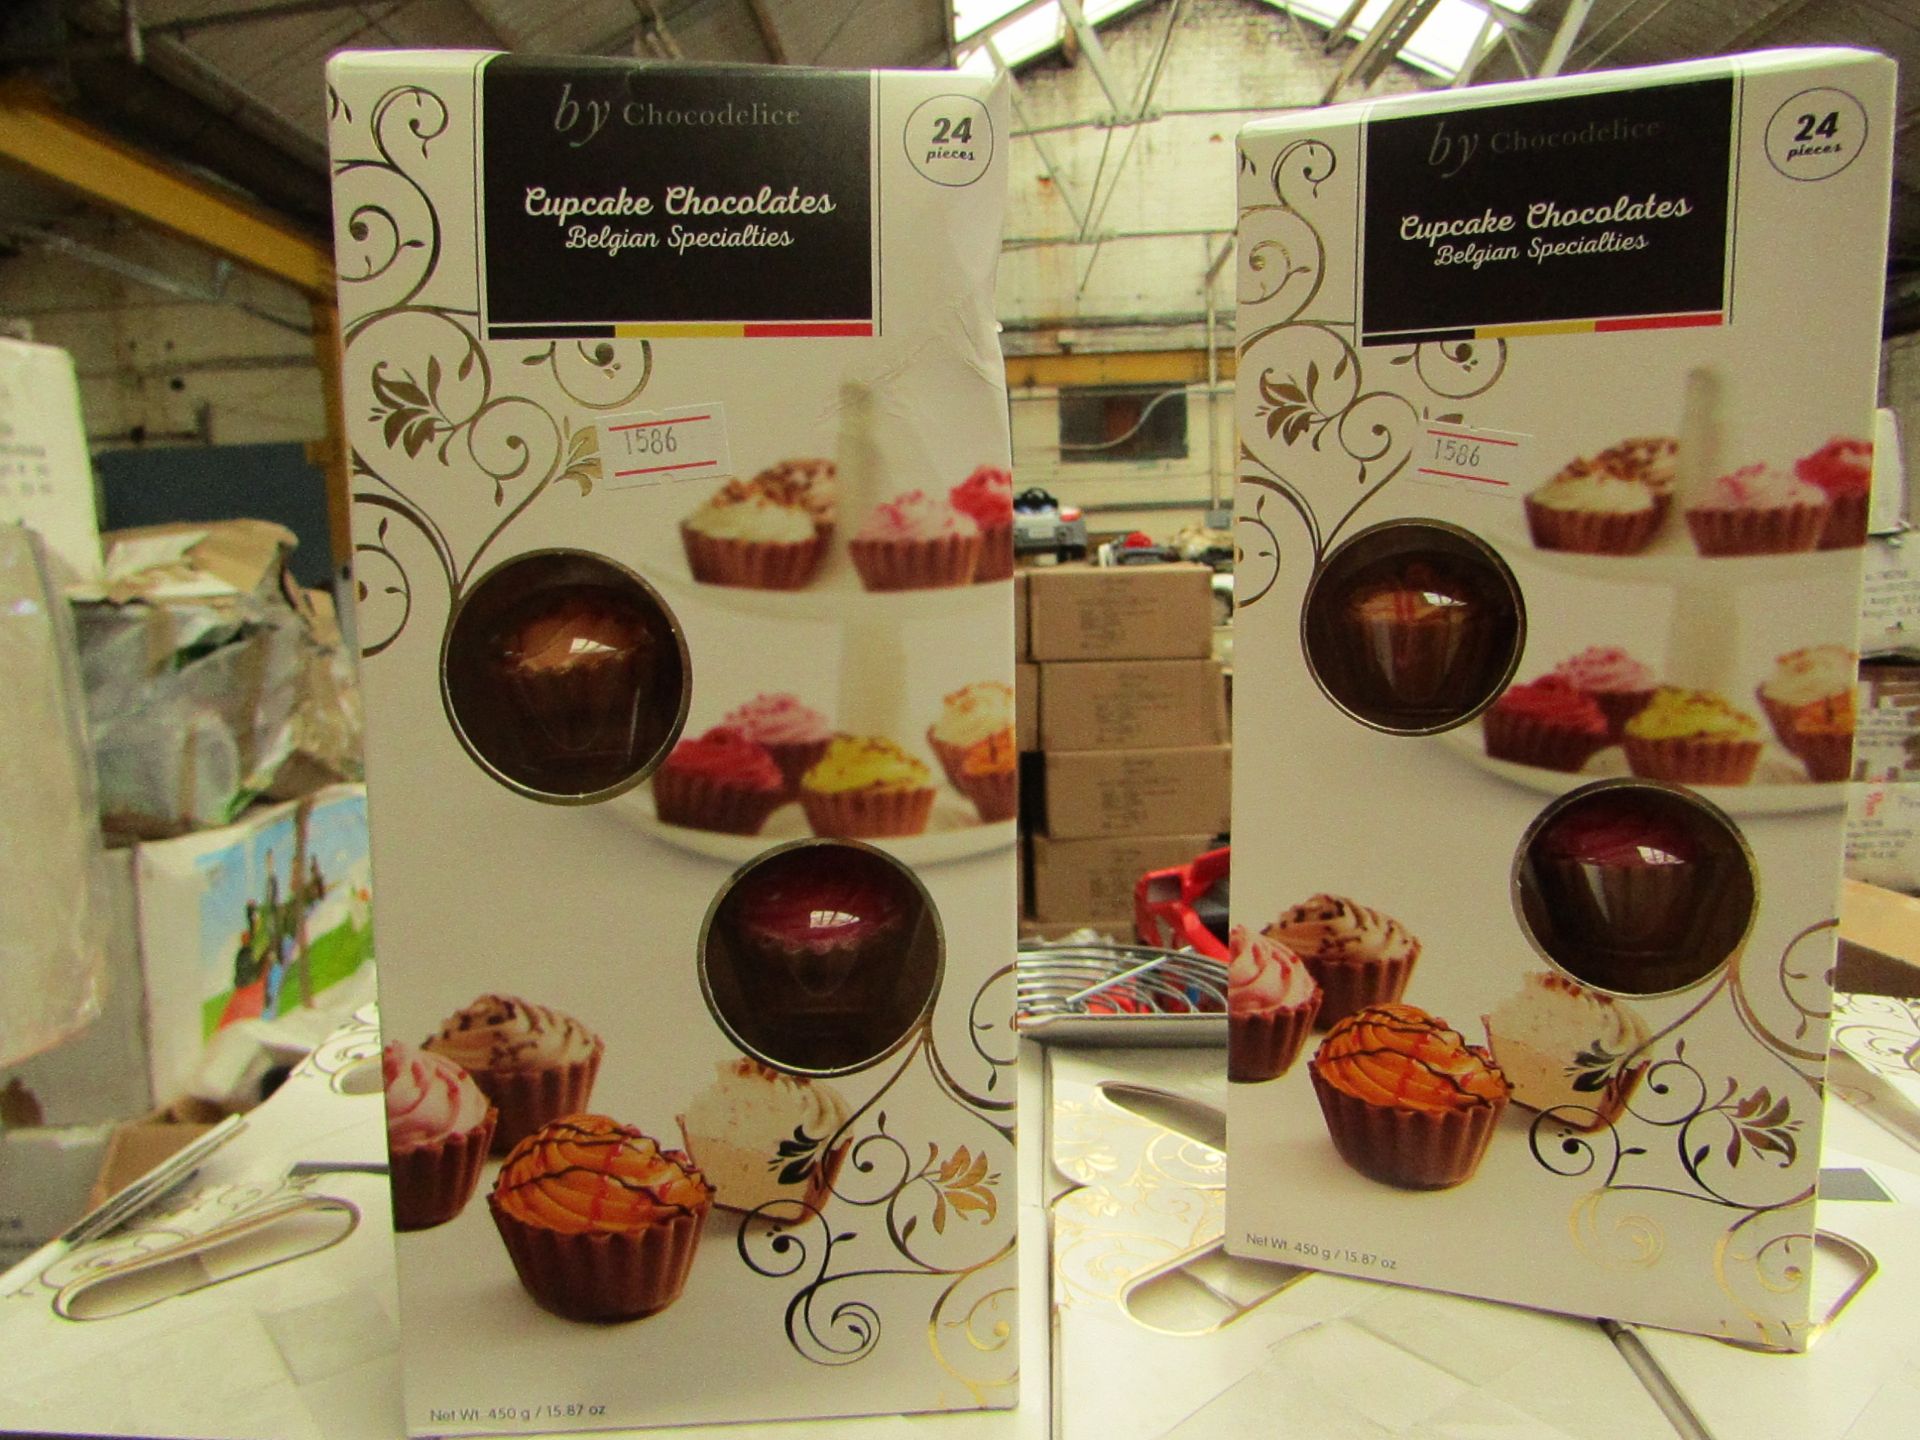 2 x Cupcake Chocolate belgium specialities.450g per box.BB 30/04/19